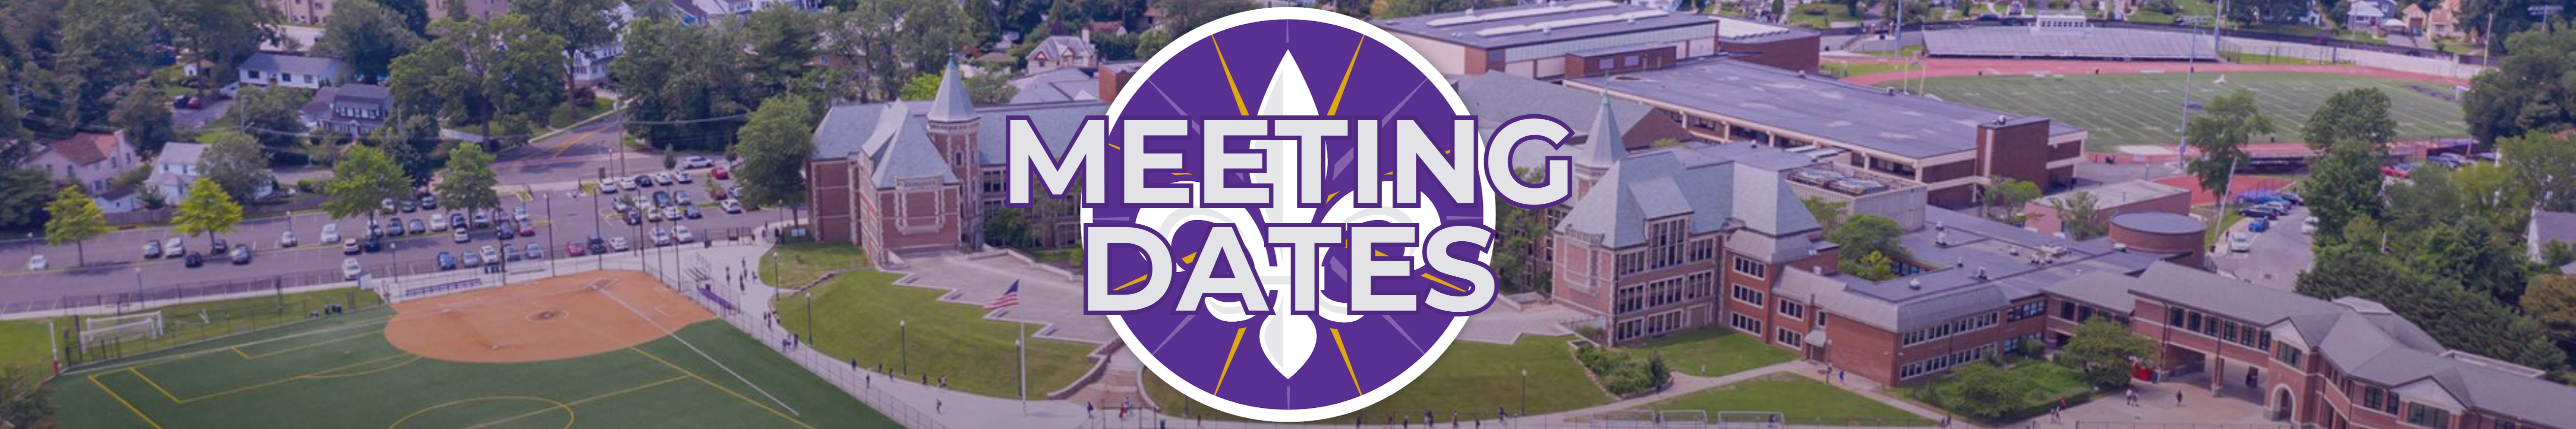 meeting dates banner